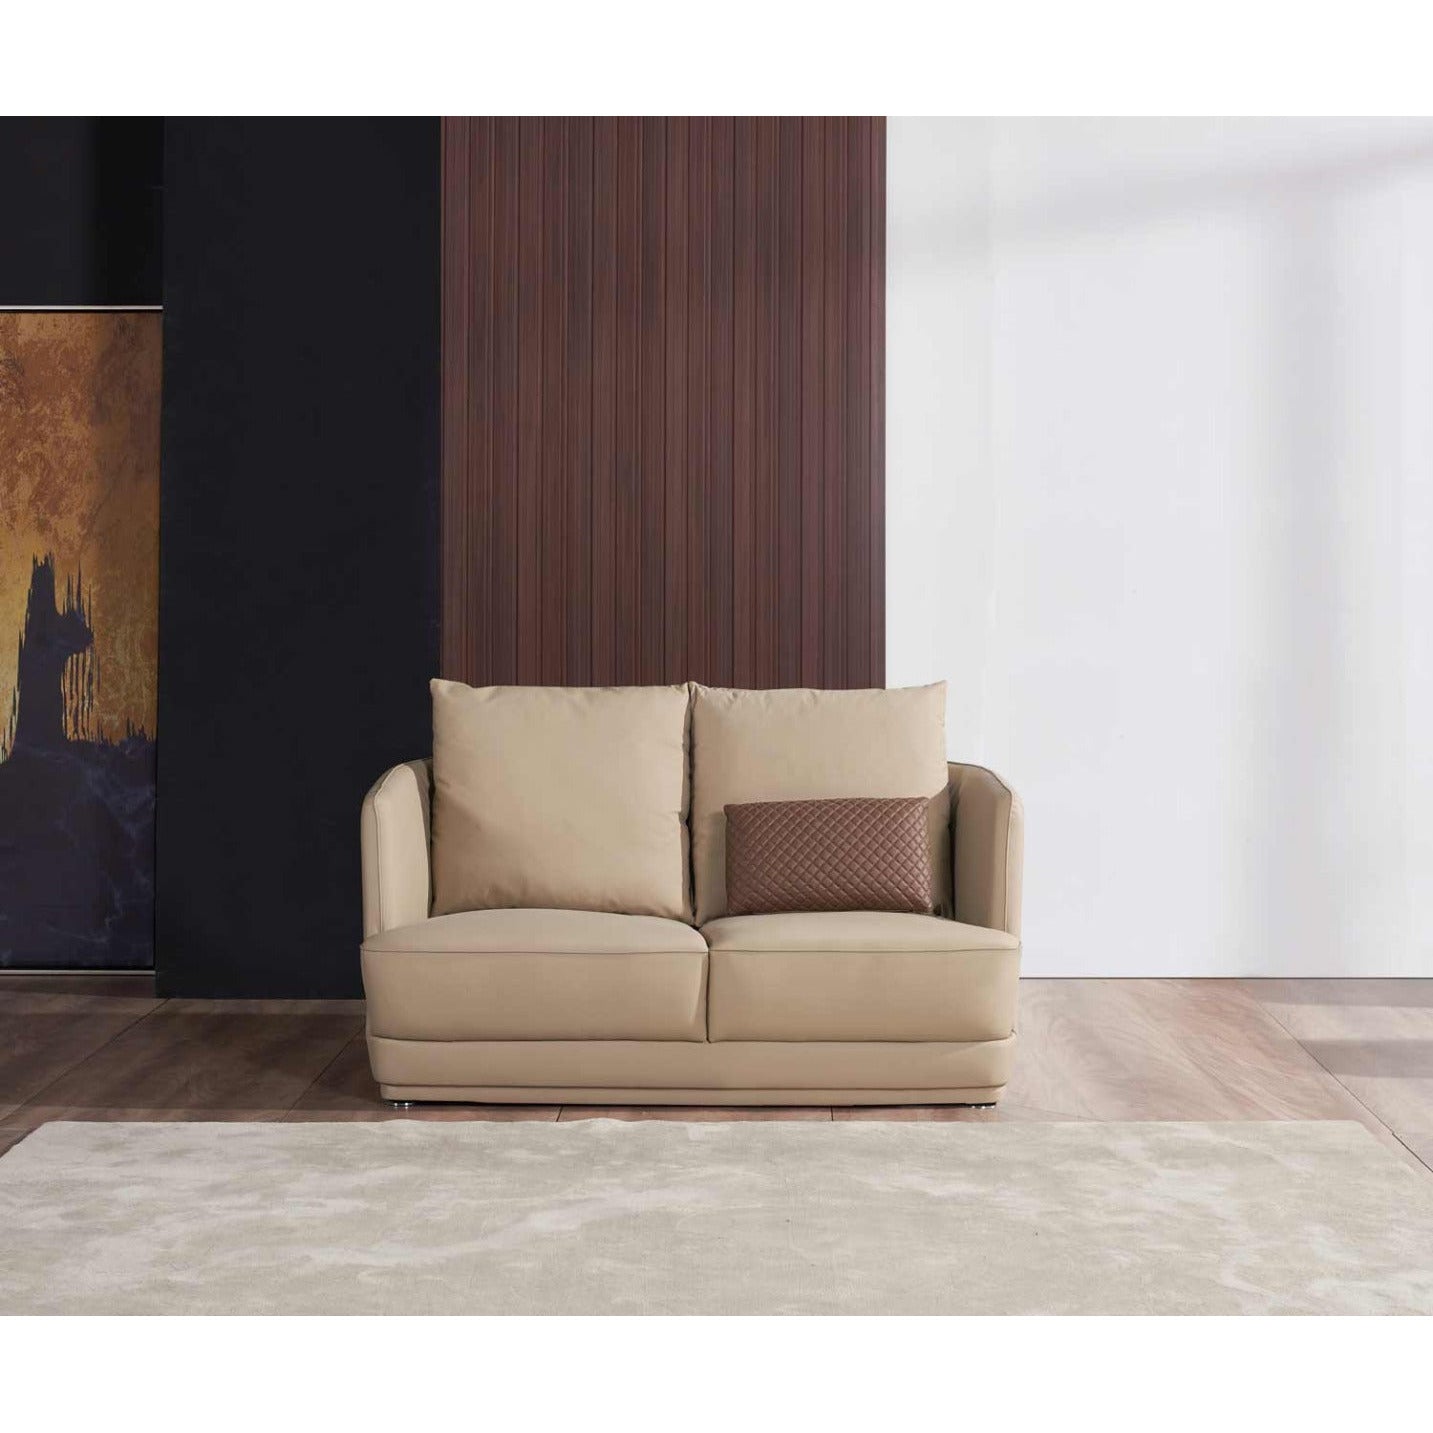 European Furniture - Glamour Loveseat in Tan-Brown - 51617-L - New Star Living